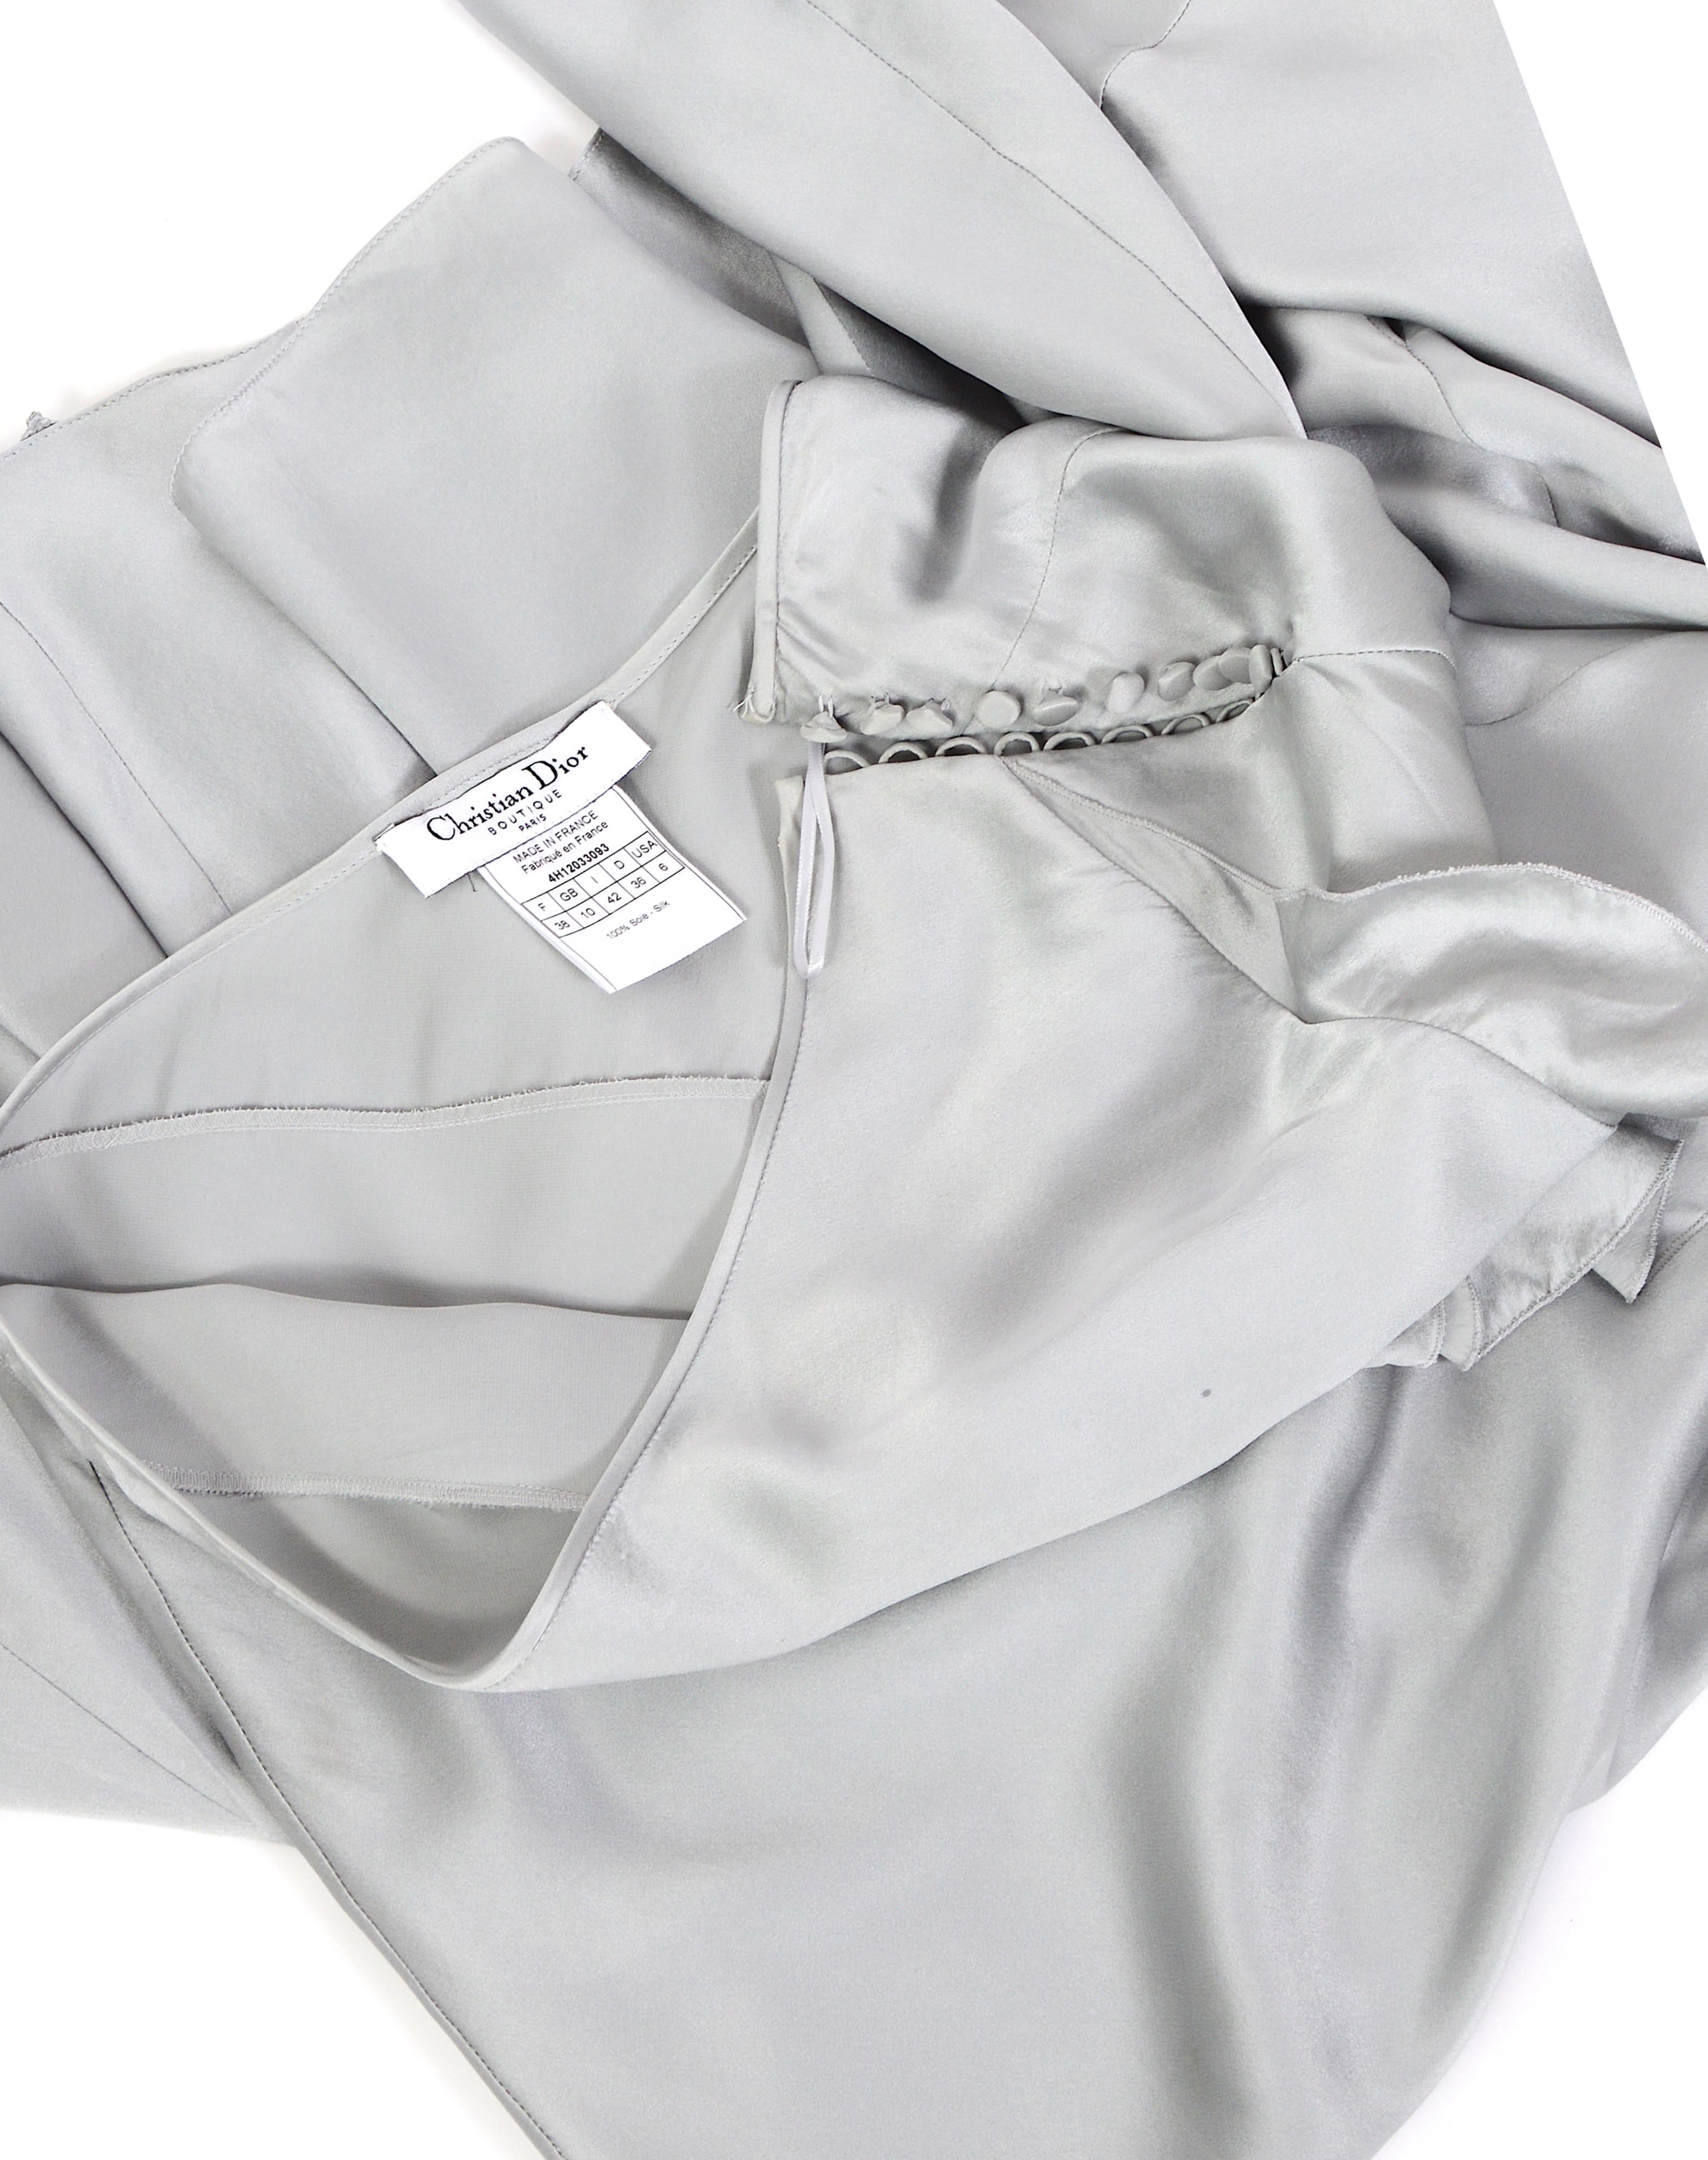 Christian Dior by John Galliano vintage silk ruffled bias cut low waist skirt   For Sale 8